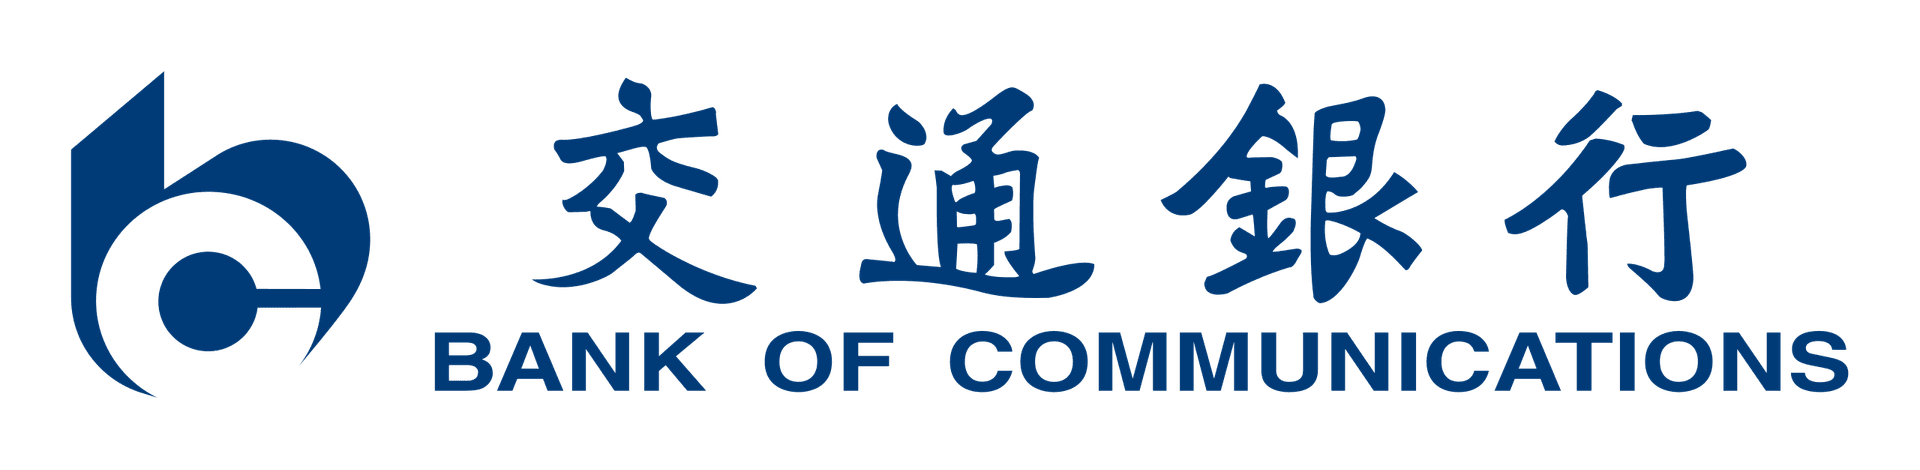 marketing strategy of Bank of Communications - Bank of Communications logo